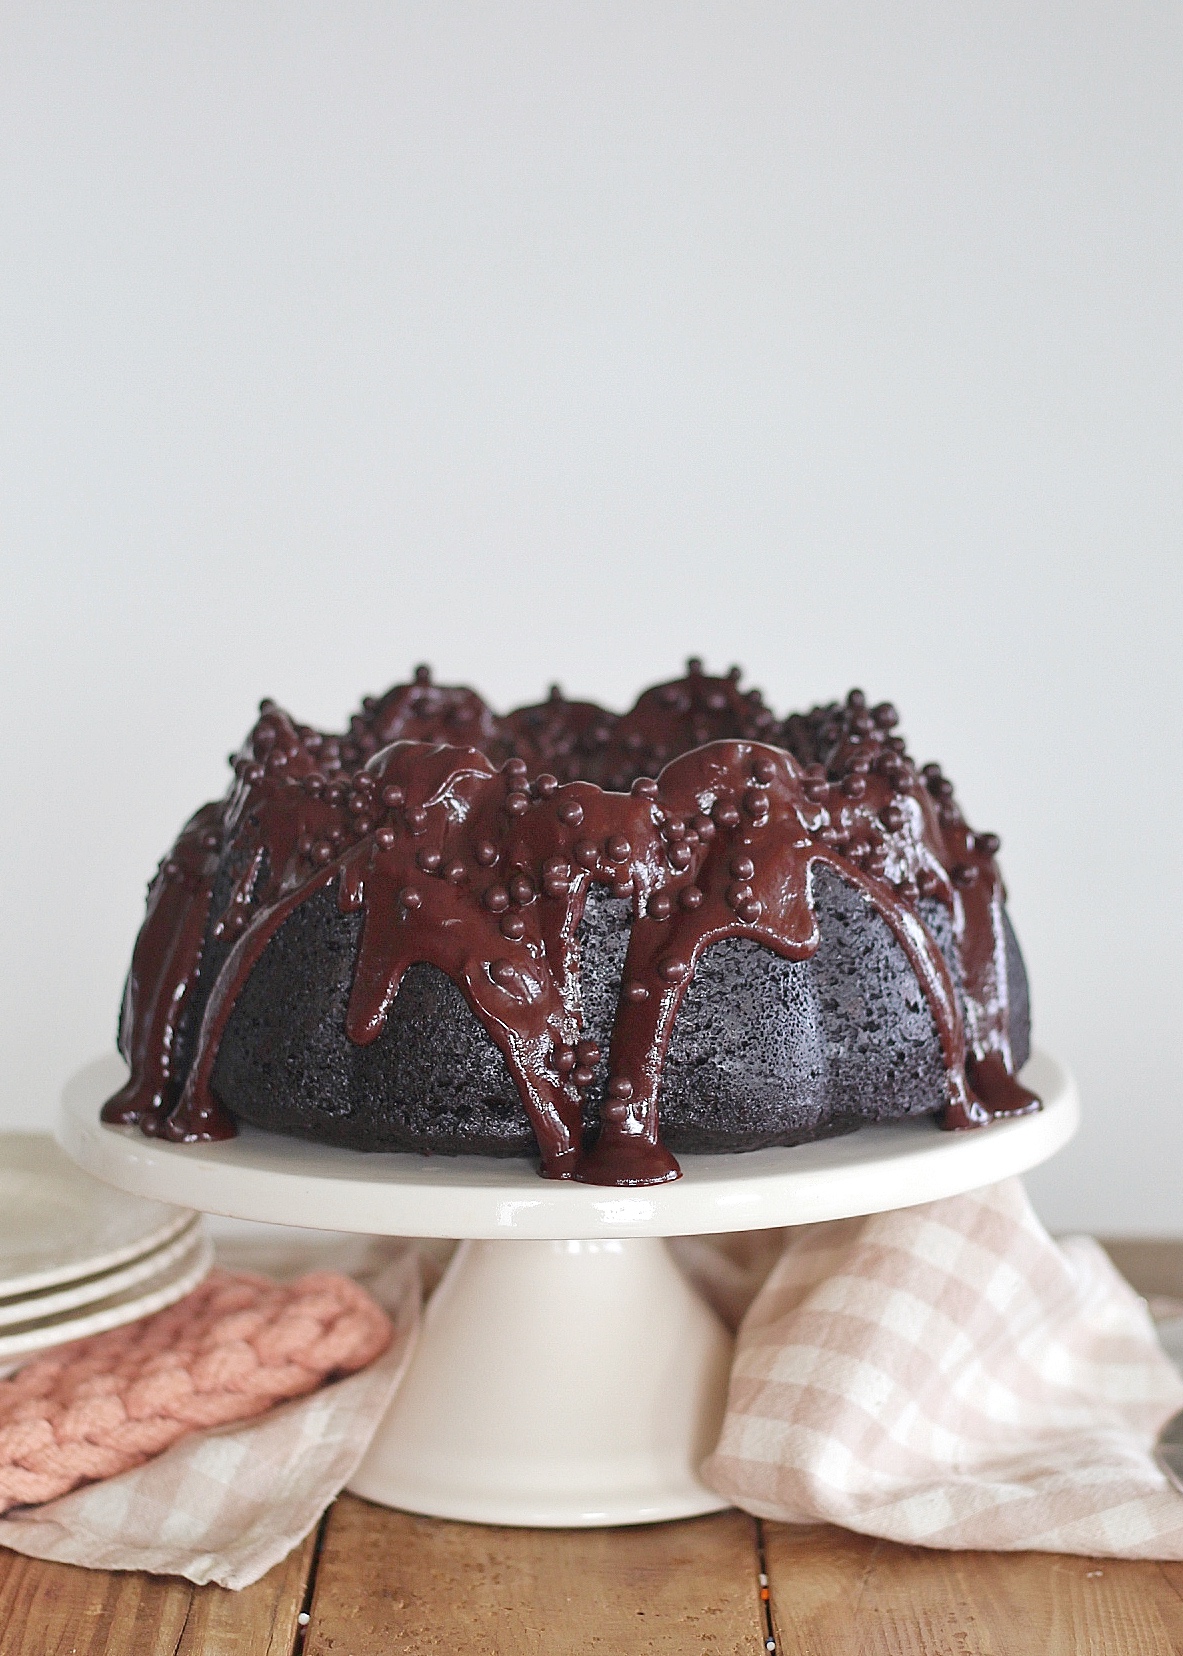 tips and tricks for baking a bundt cake. www.cakebycourtney.com